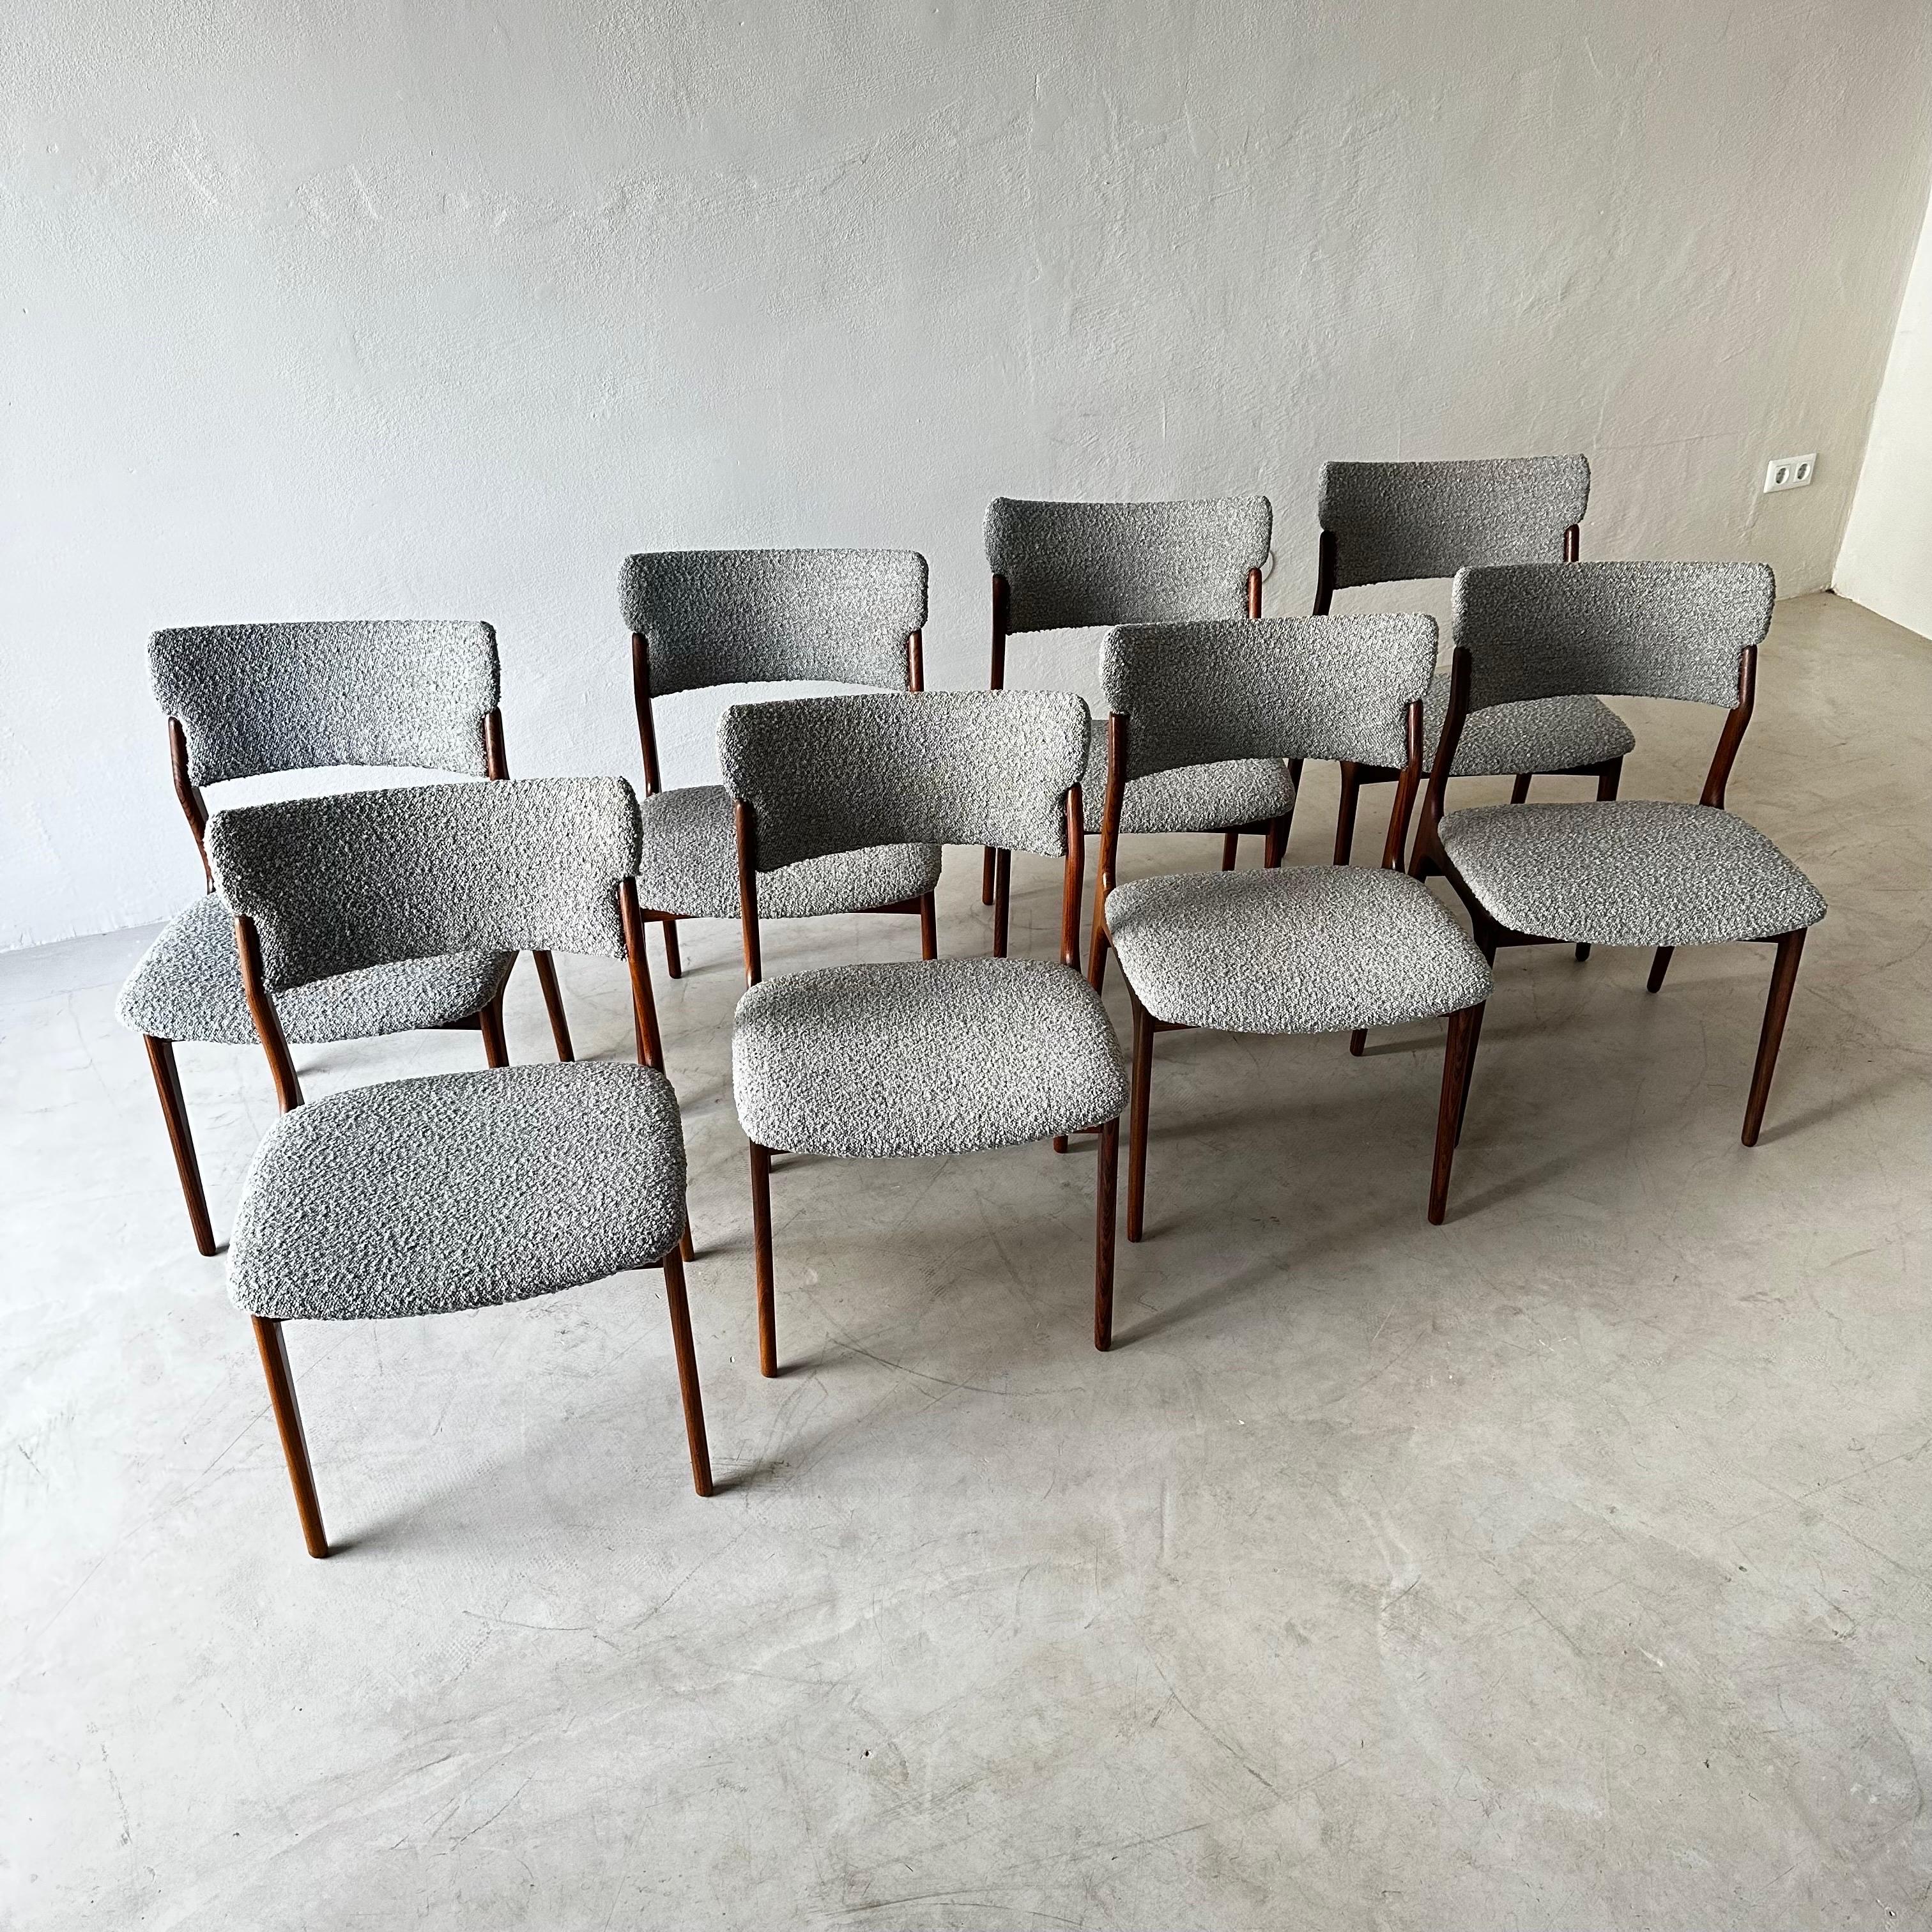 Rare Set of 8 Sculptural Scandinavian Dining Chairs, Denmark, 1960s For Sale 4